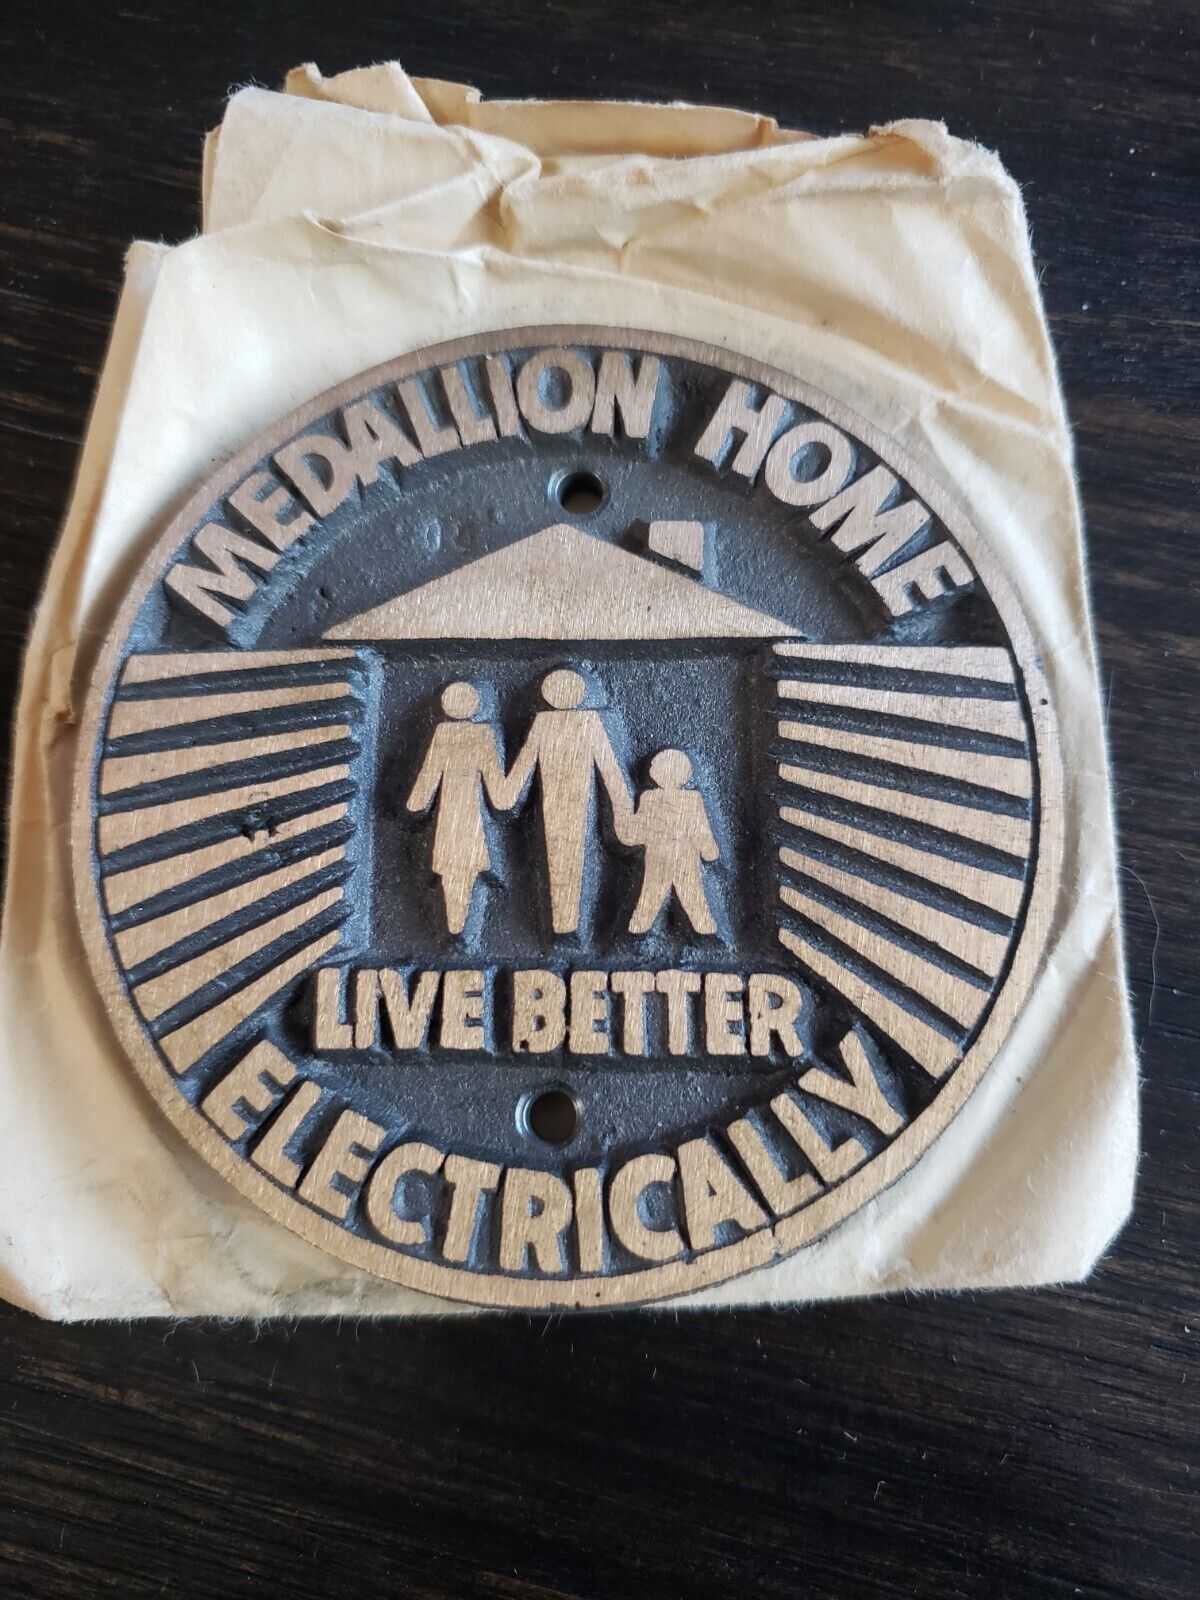 Vintage Medallion Home Live Better Electrically Bronze Badge 1950s 3”